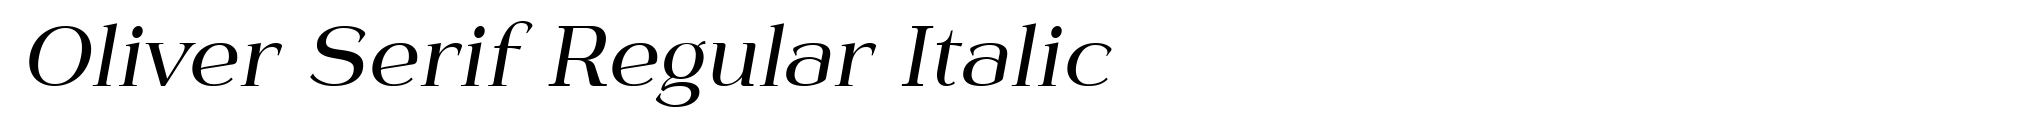 Oliver Serif Regular Italic image